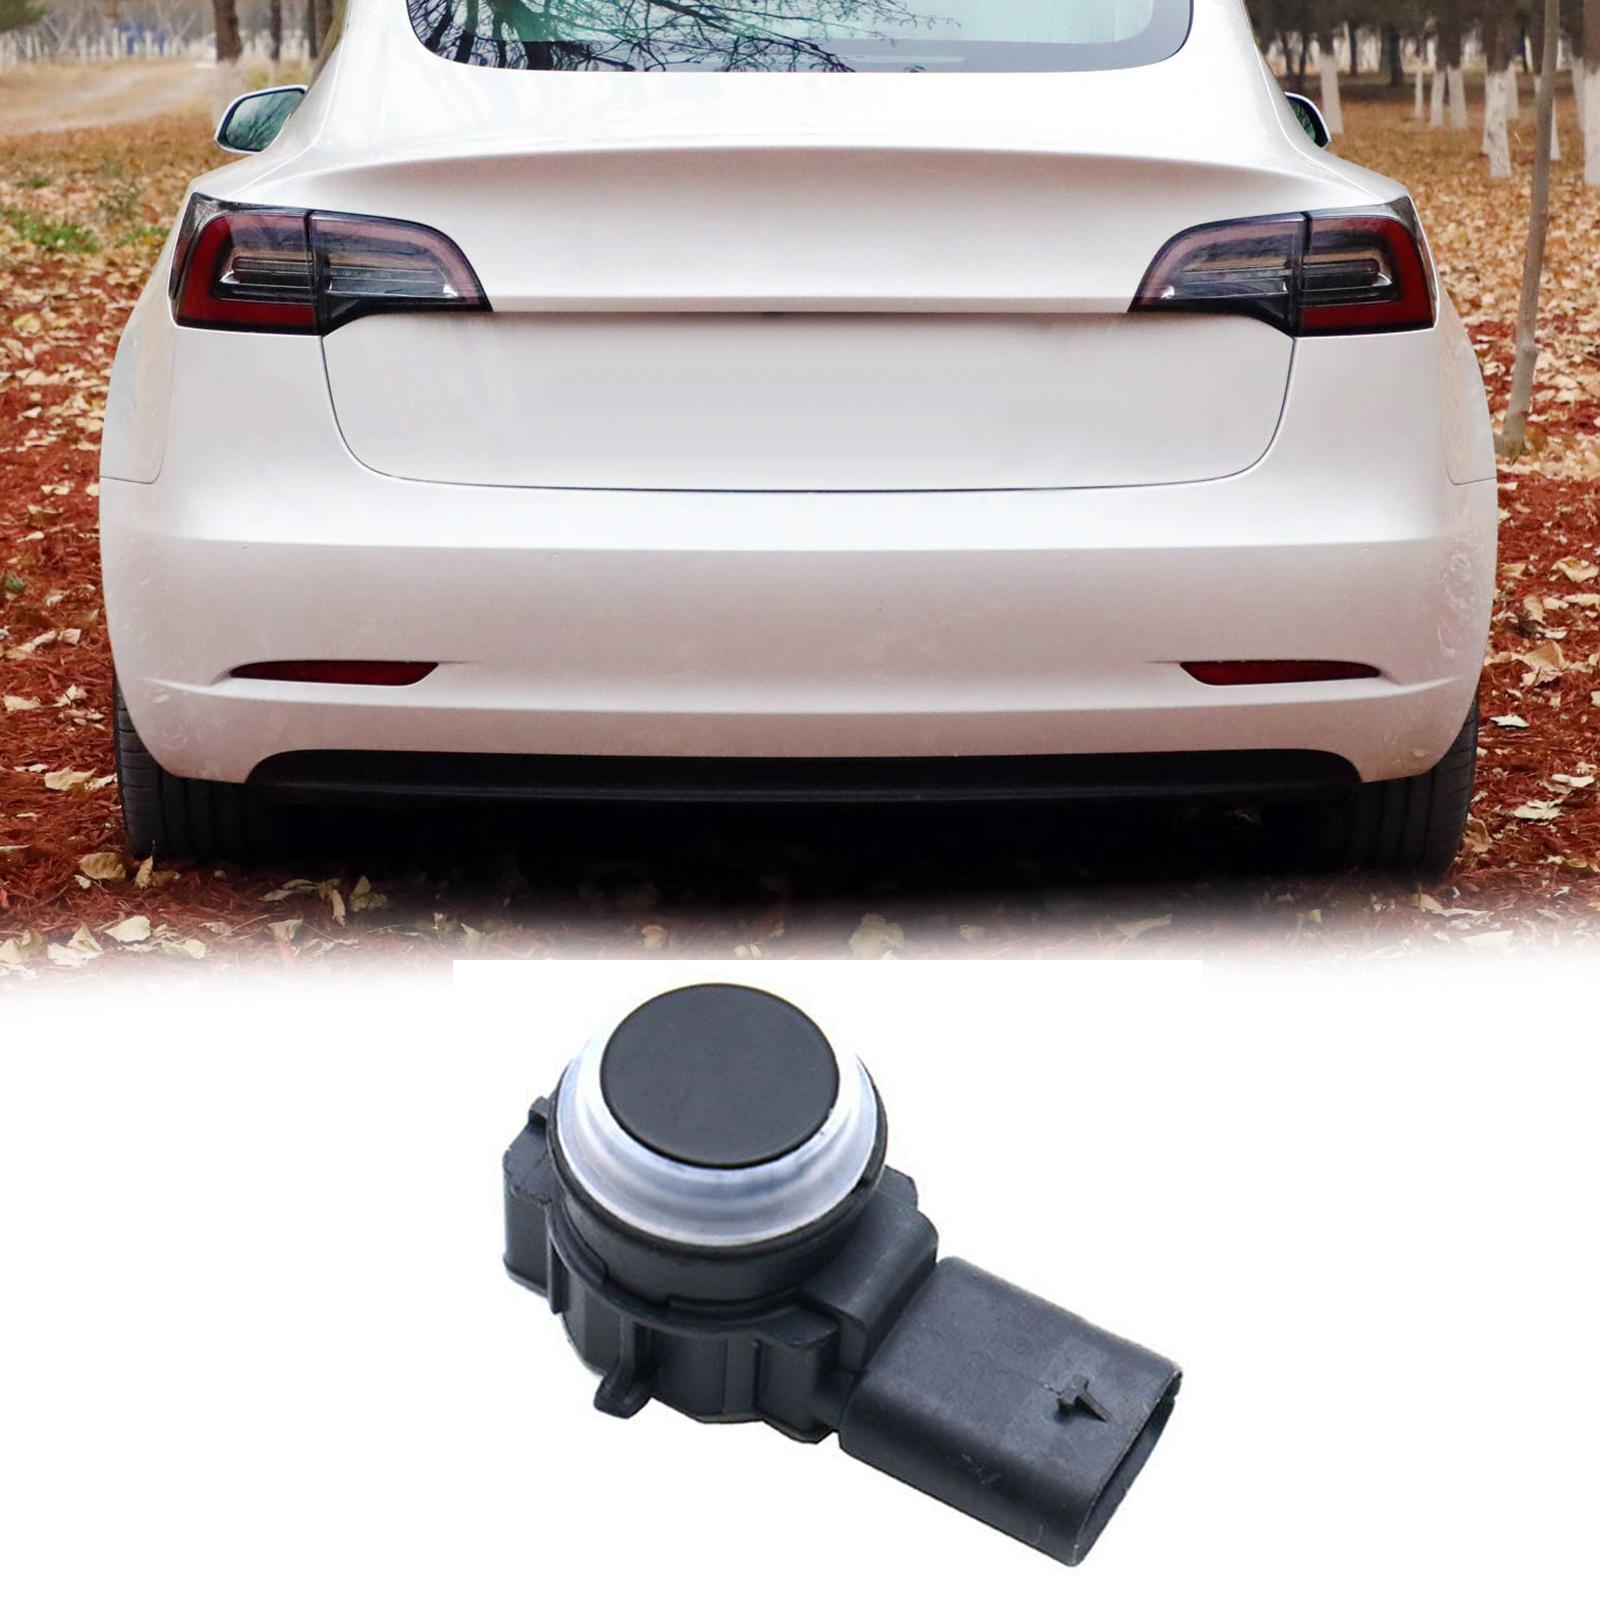 Front Parking Sensor Assist PDC 1048474-01-a Supplies for Tesla Model S